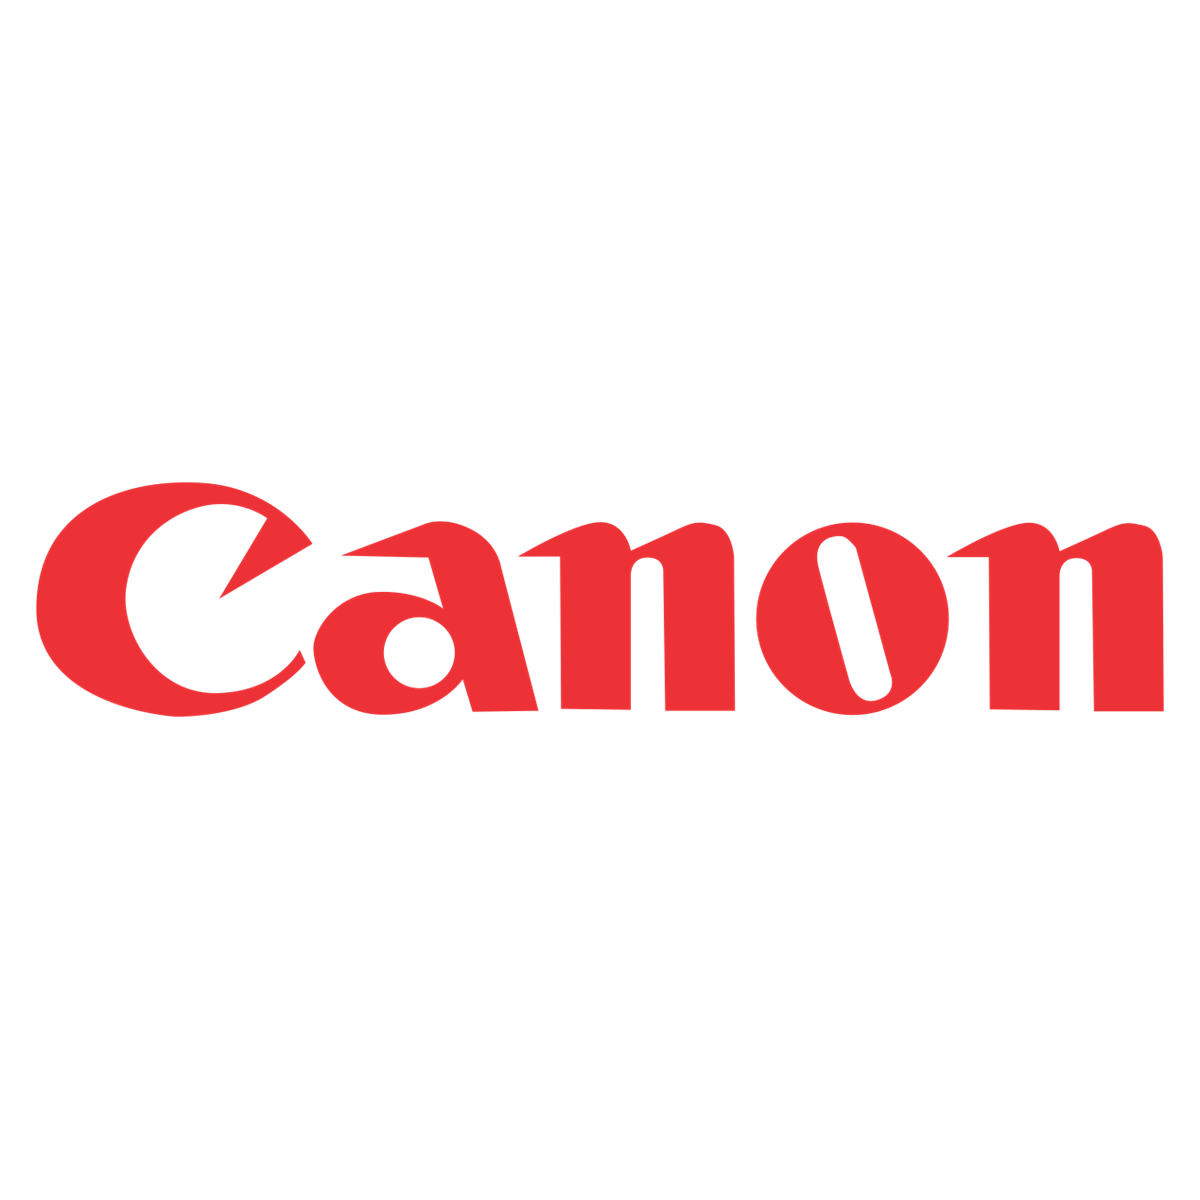 Canon Fixing Assembly 220V